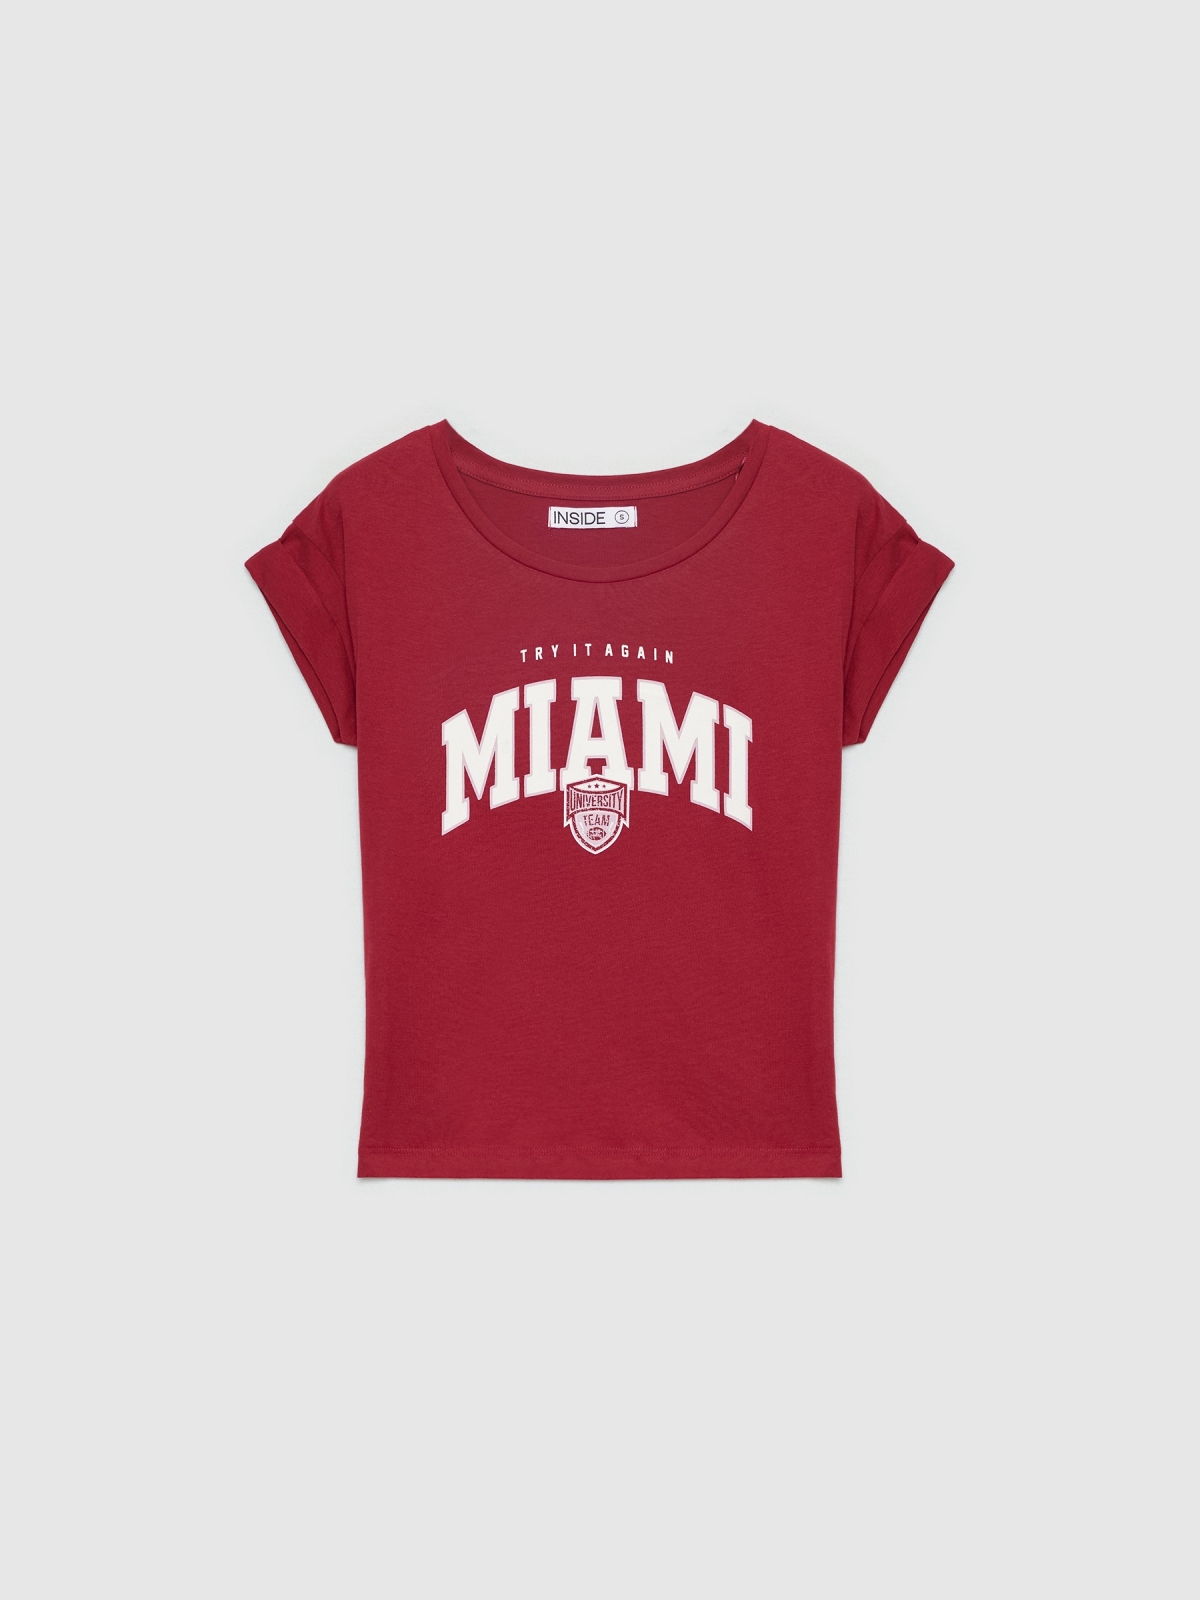  T-shirt Universidade de Miami granada